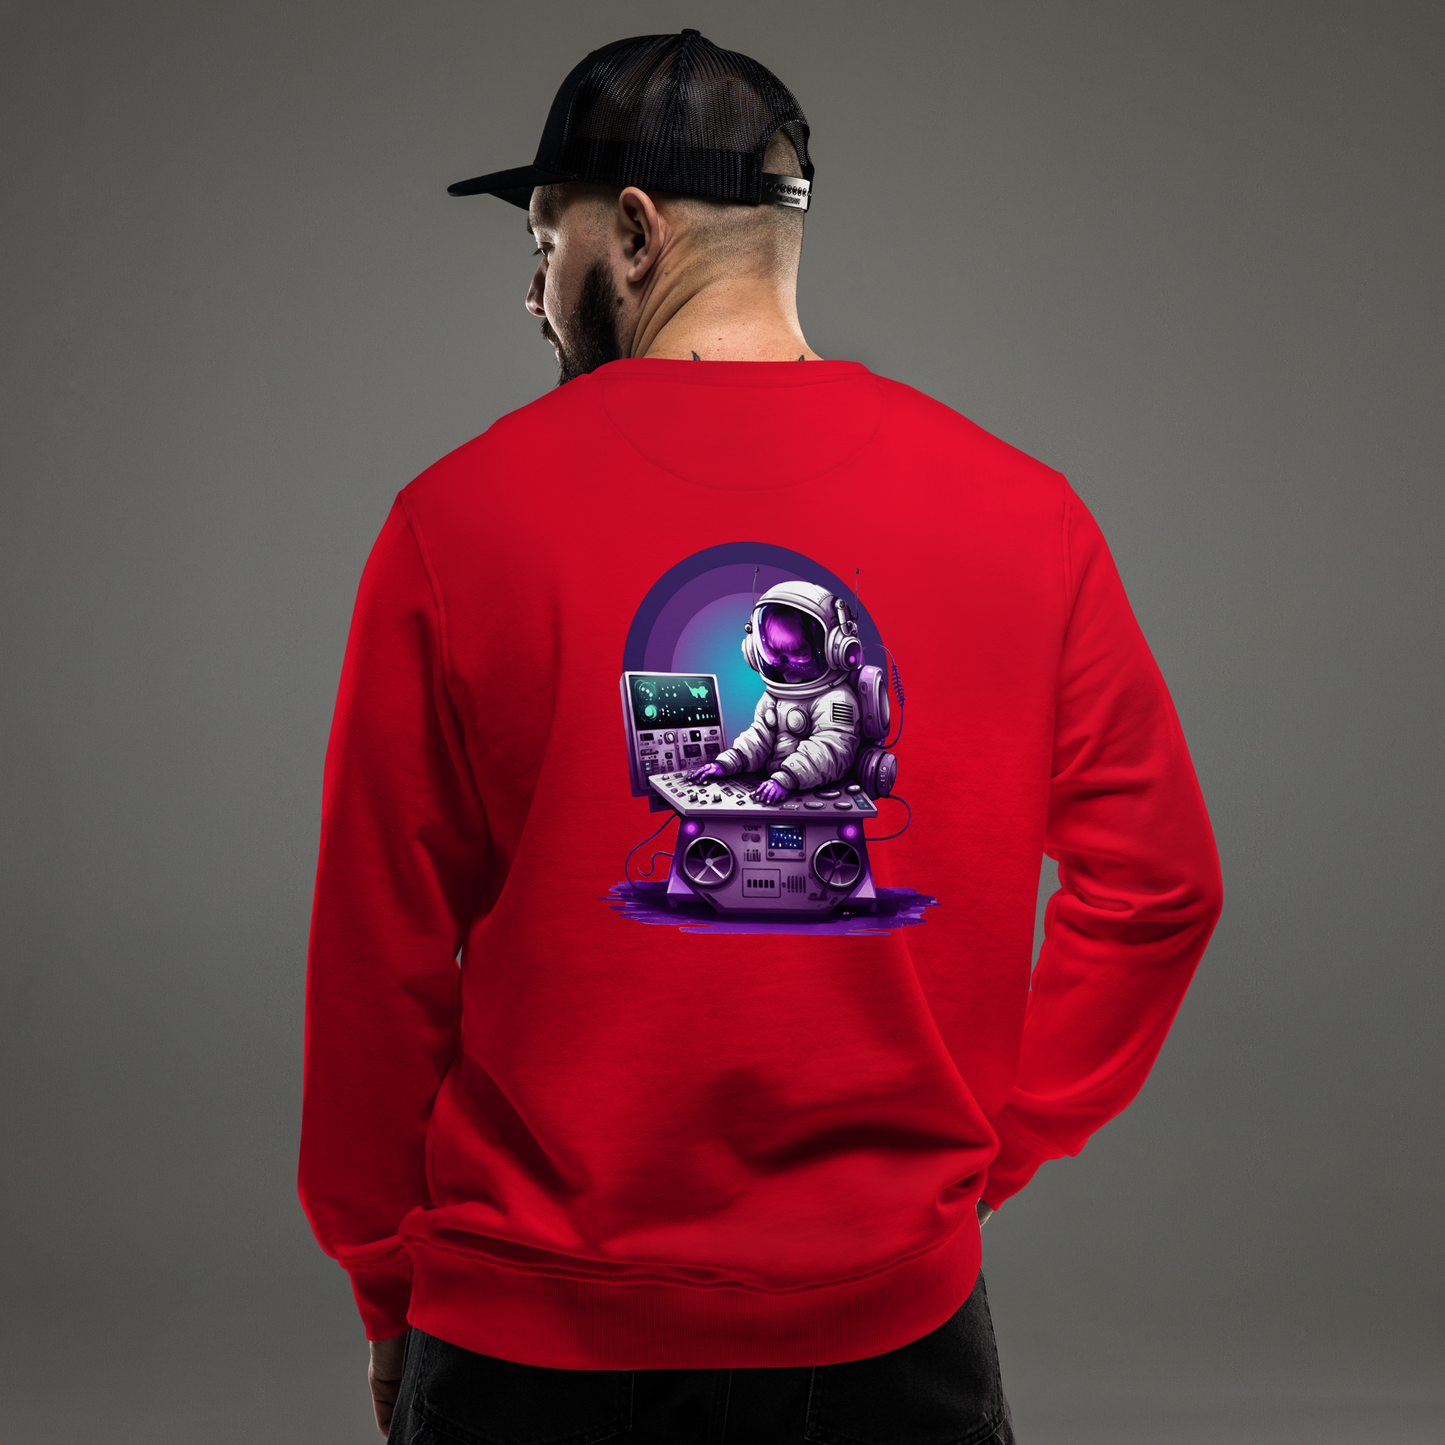 Sweatshirt - Space V1.1 - Red - Standard